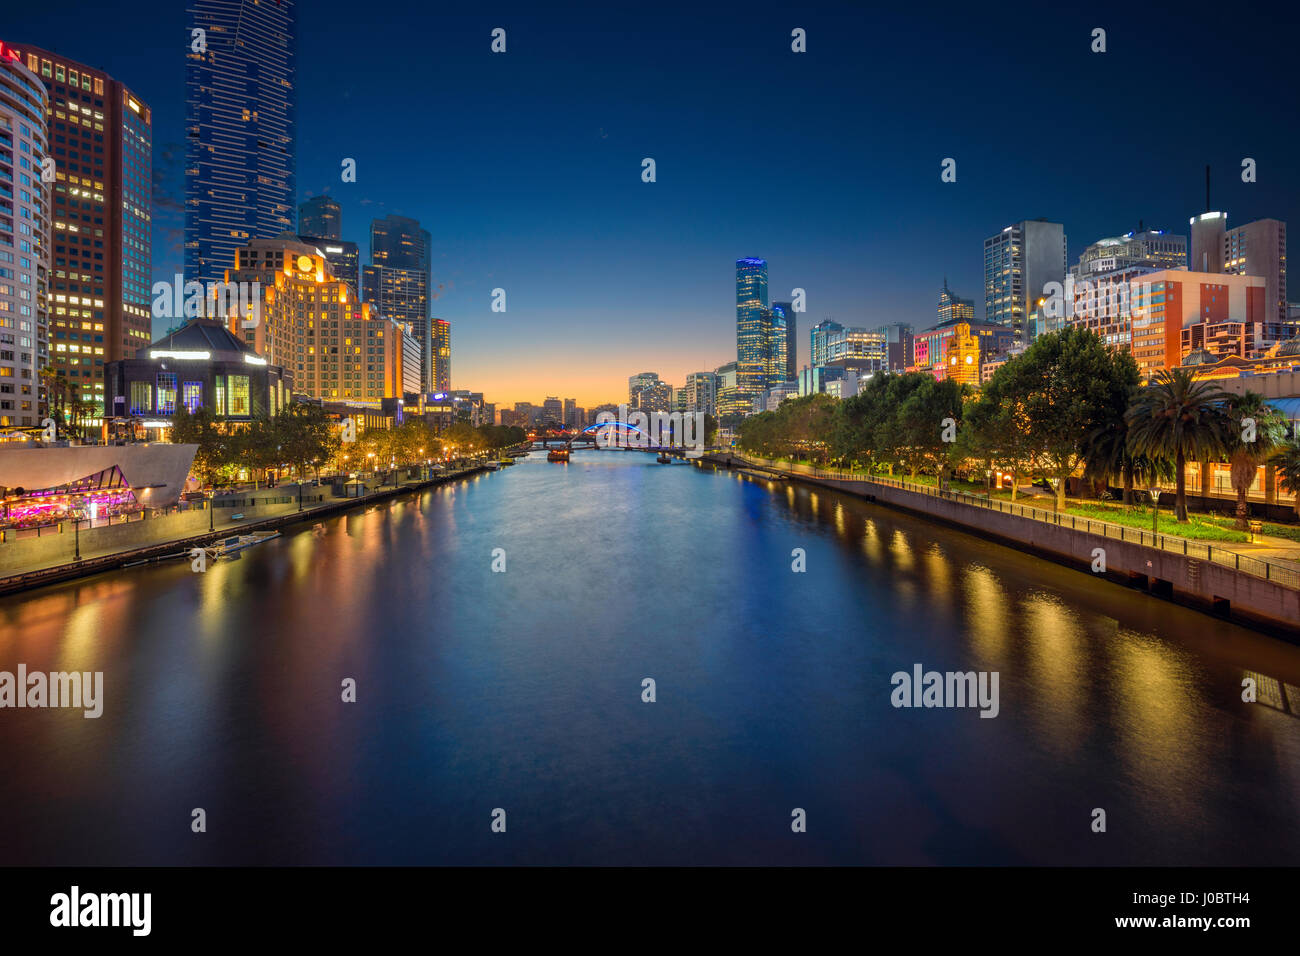 City of Melbourne. Cityscape image of Melbourne, Australia during twilight blue hour. Stock Photo